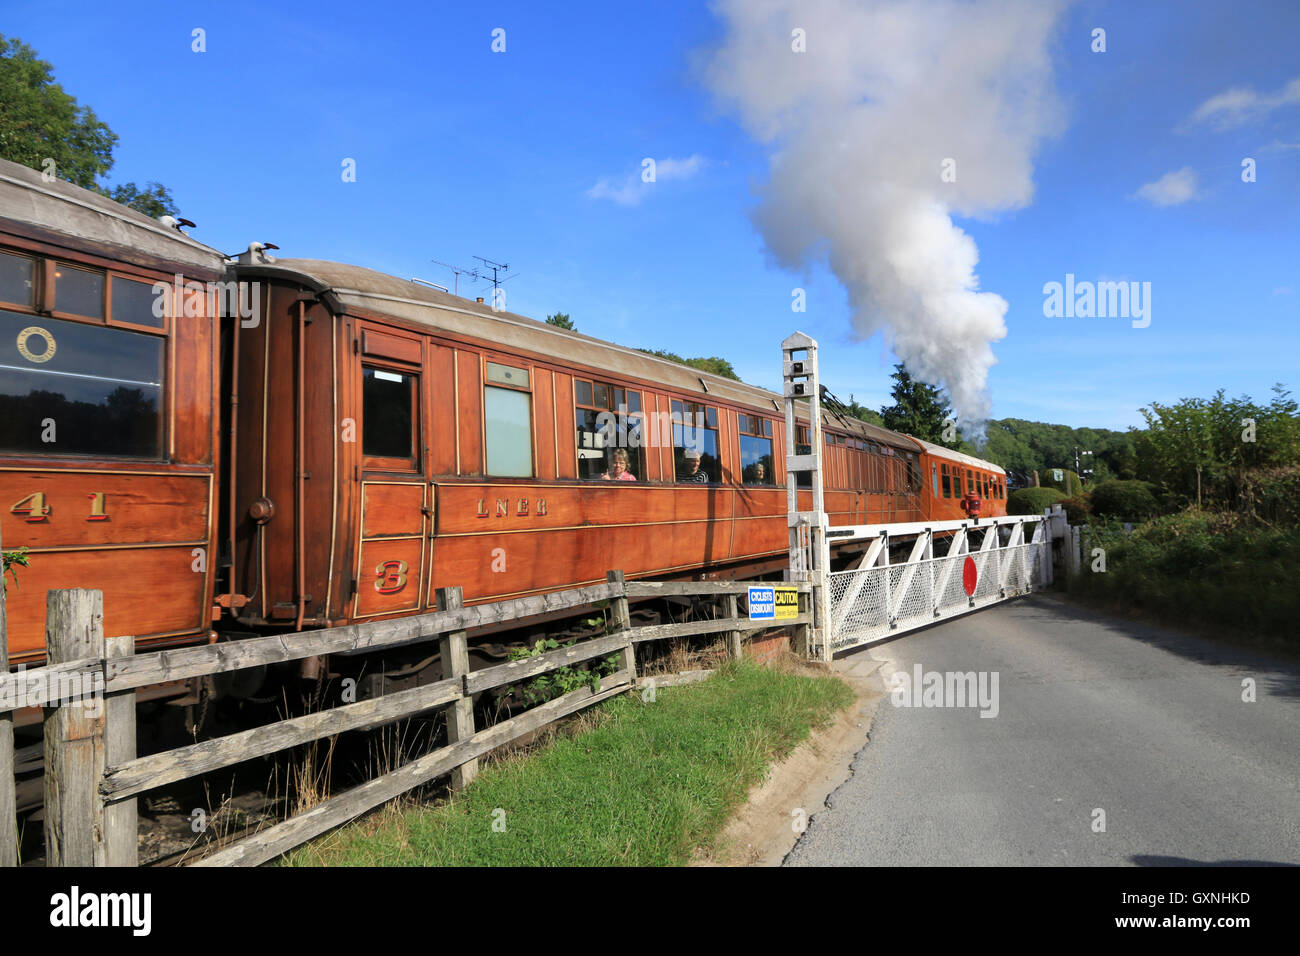 Train with steam locomotive heading to Whitby on the North York Moors Railway, passing through Newbridge. Stock Photo